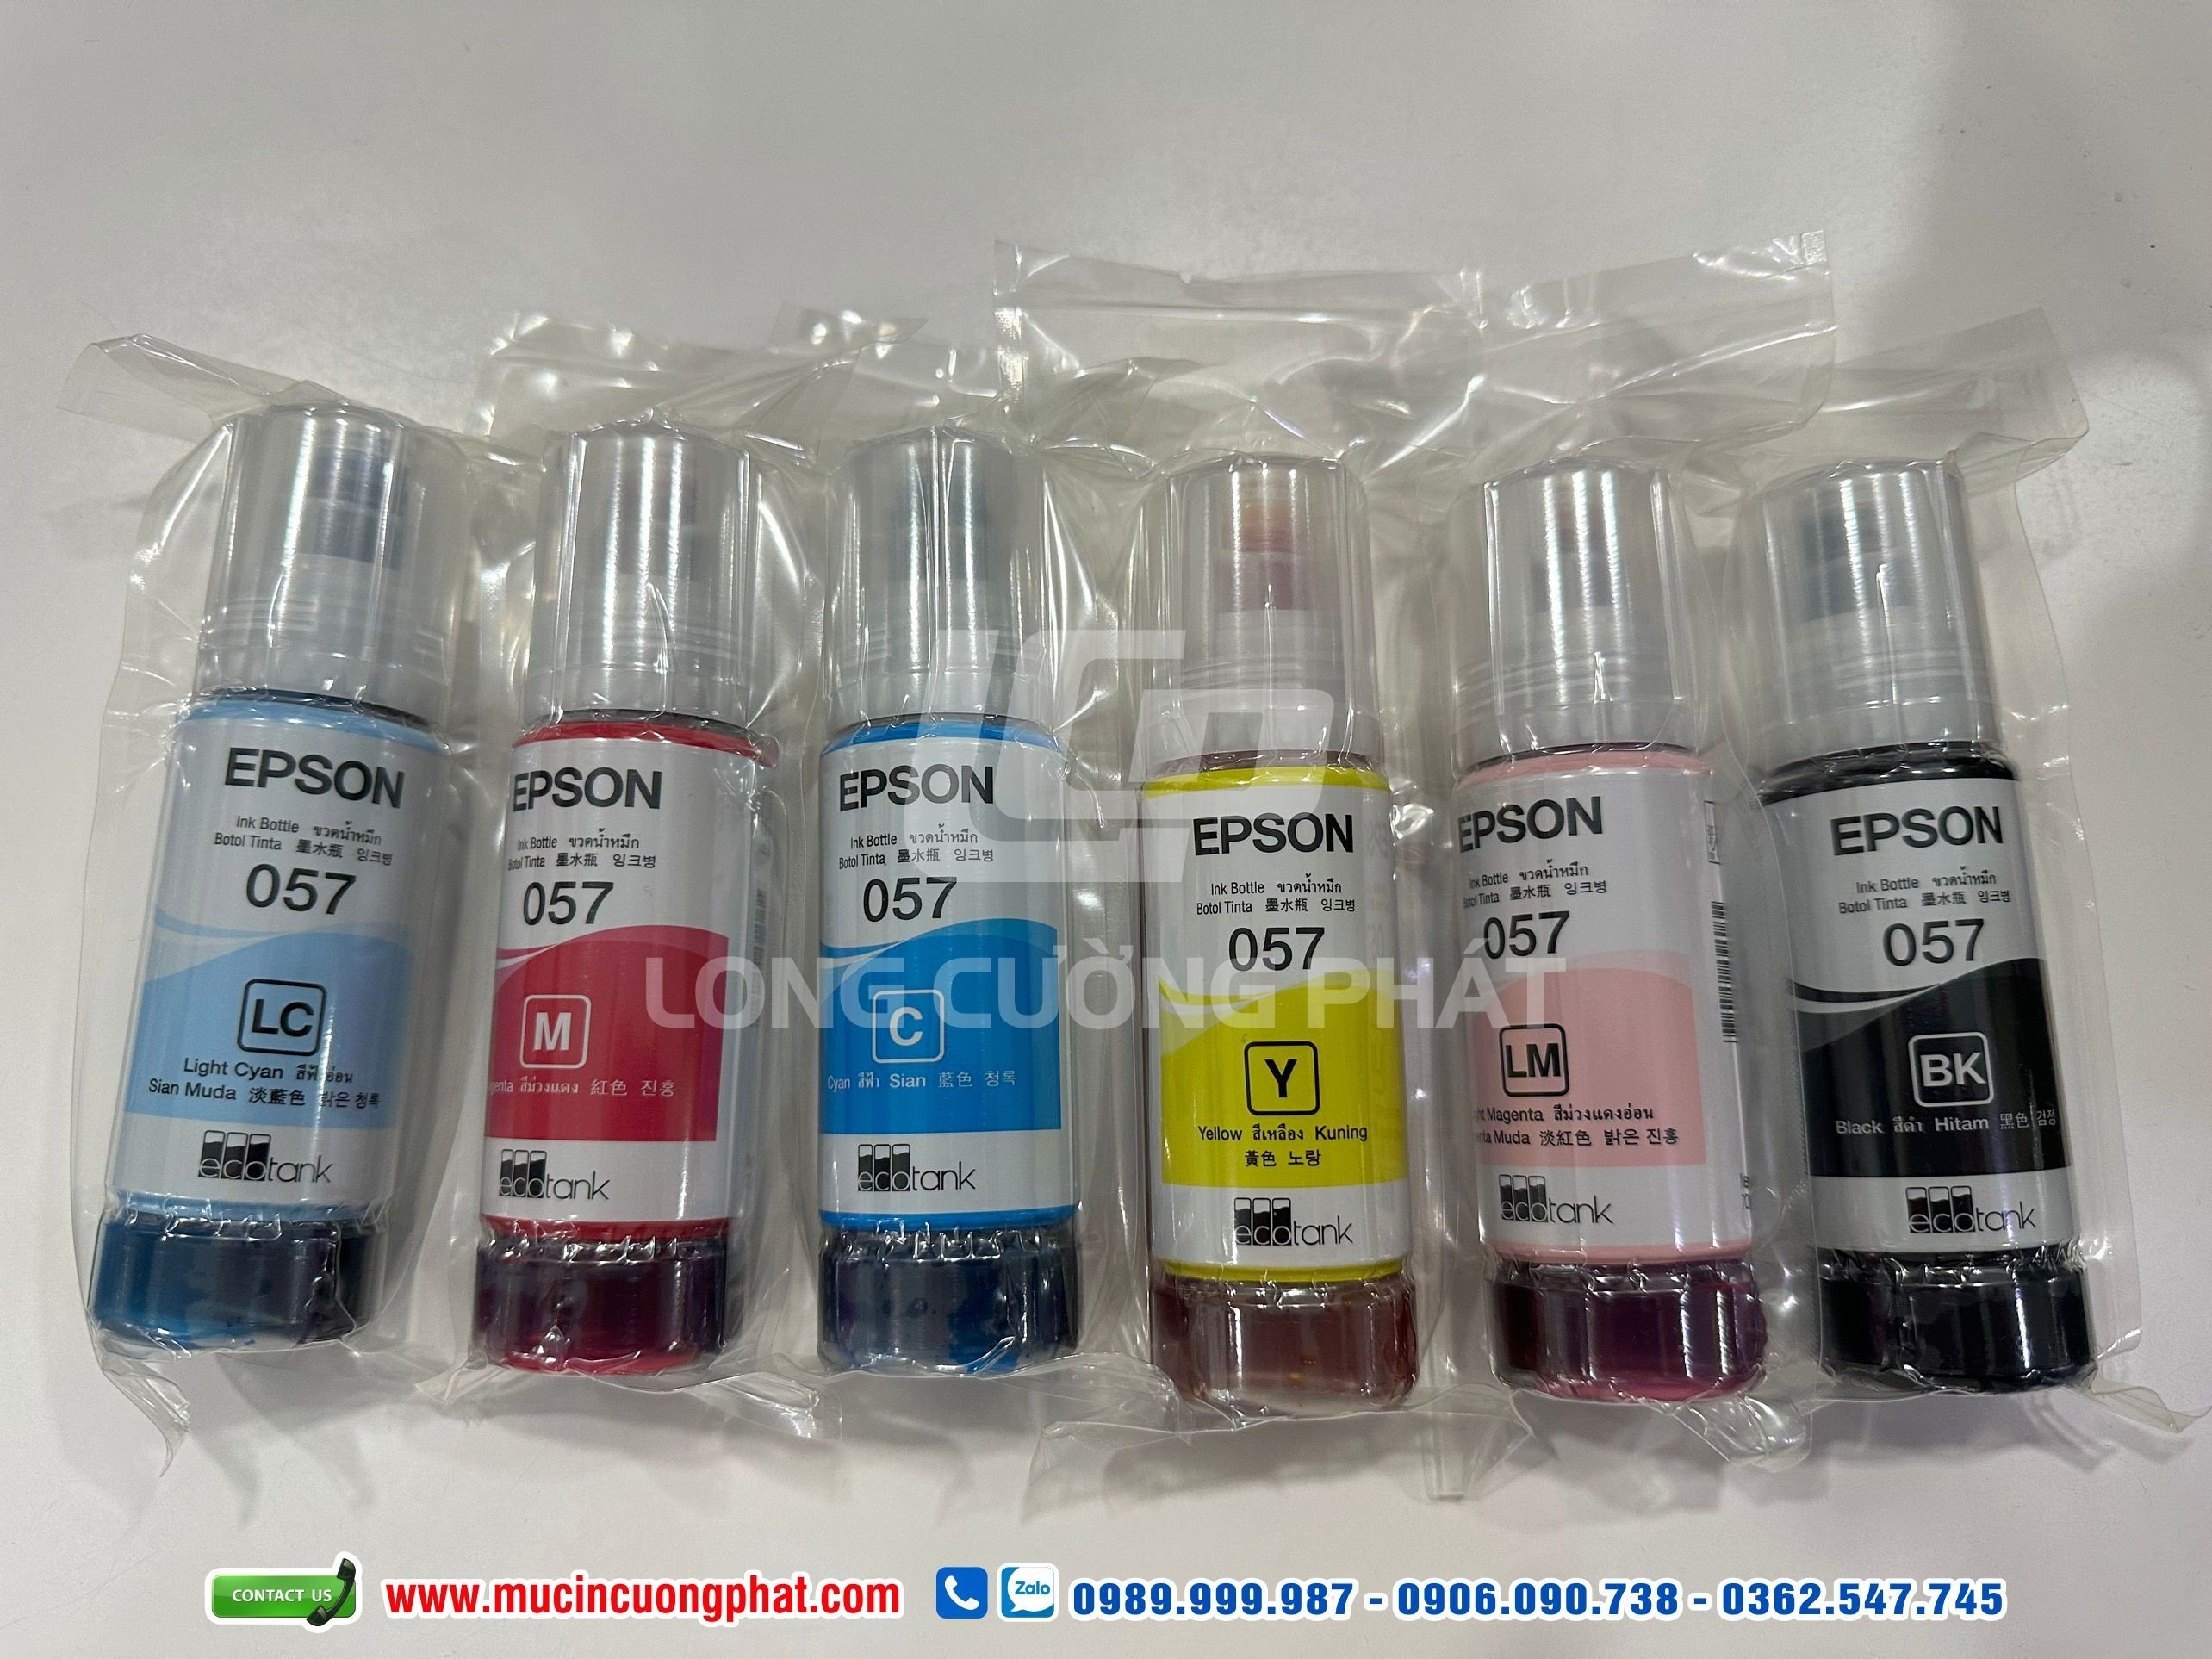 Bộ mực zin theo Epson L8050, L18050 ( 057 ink )